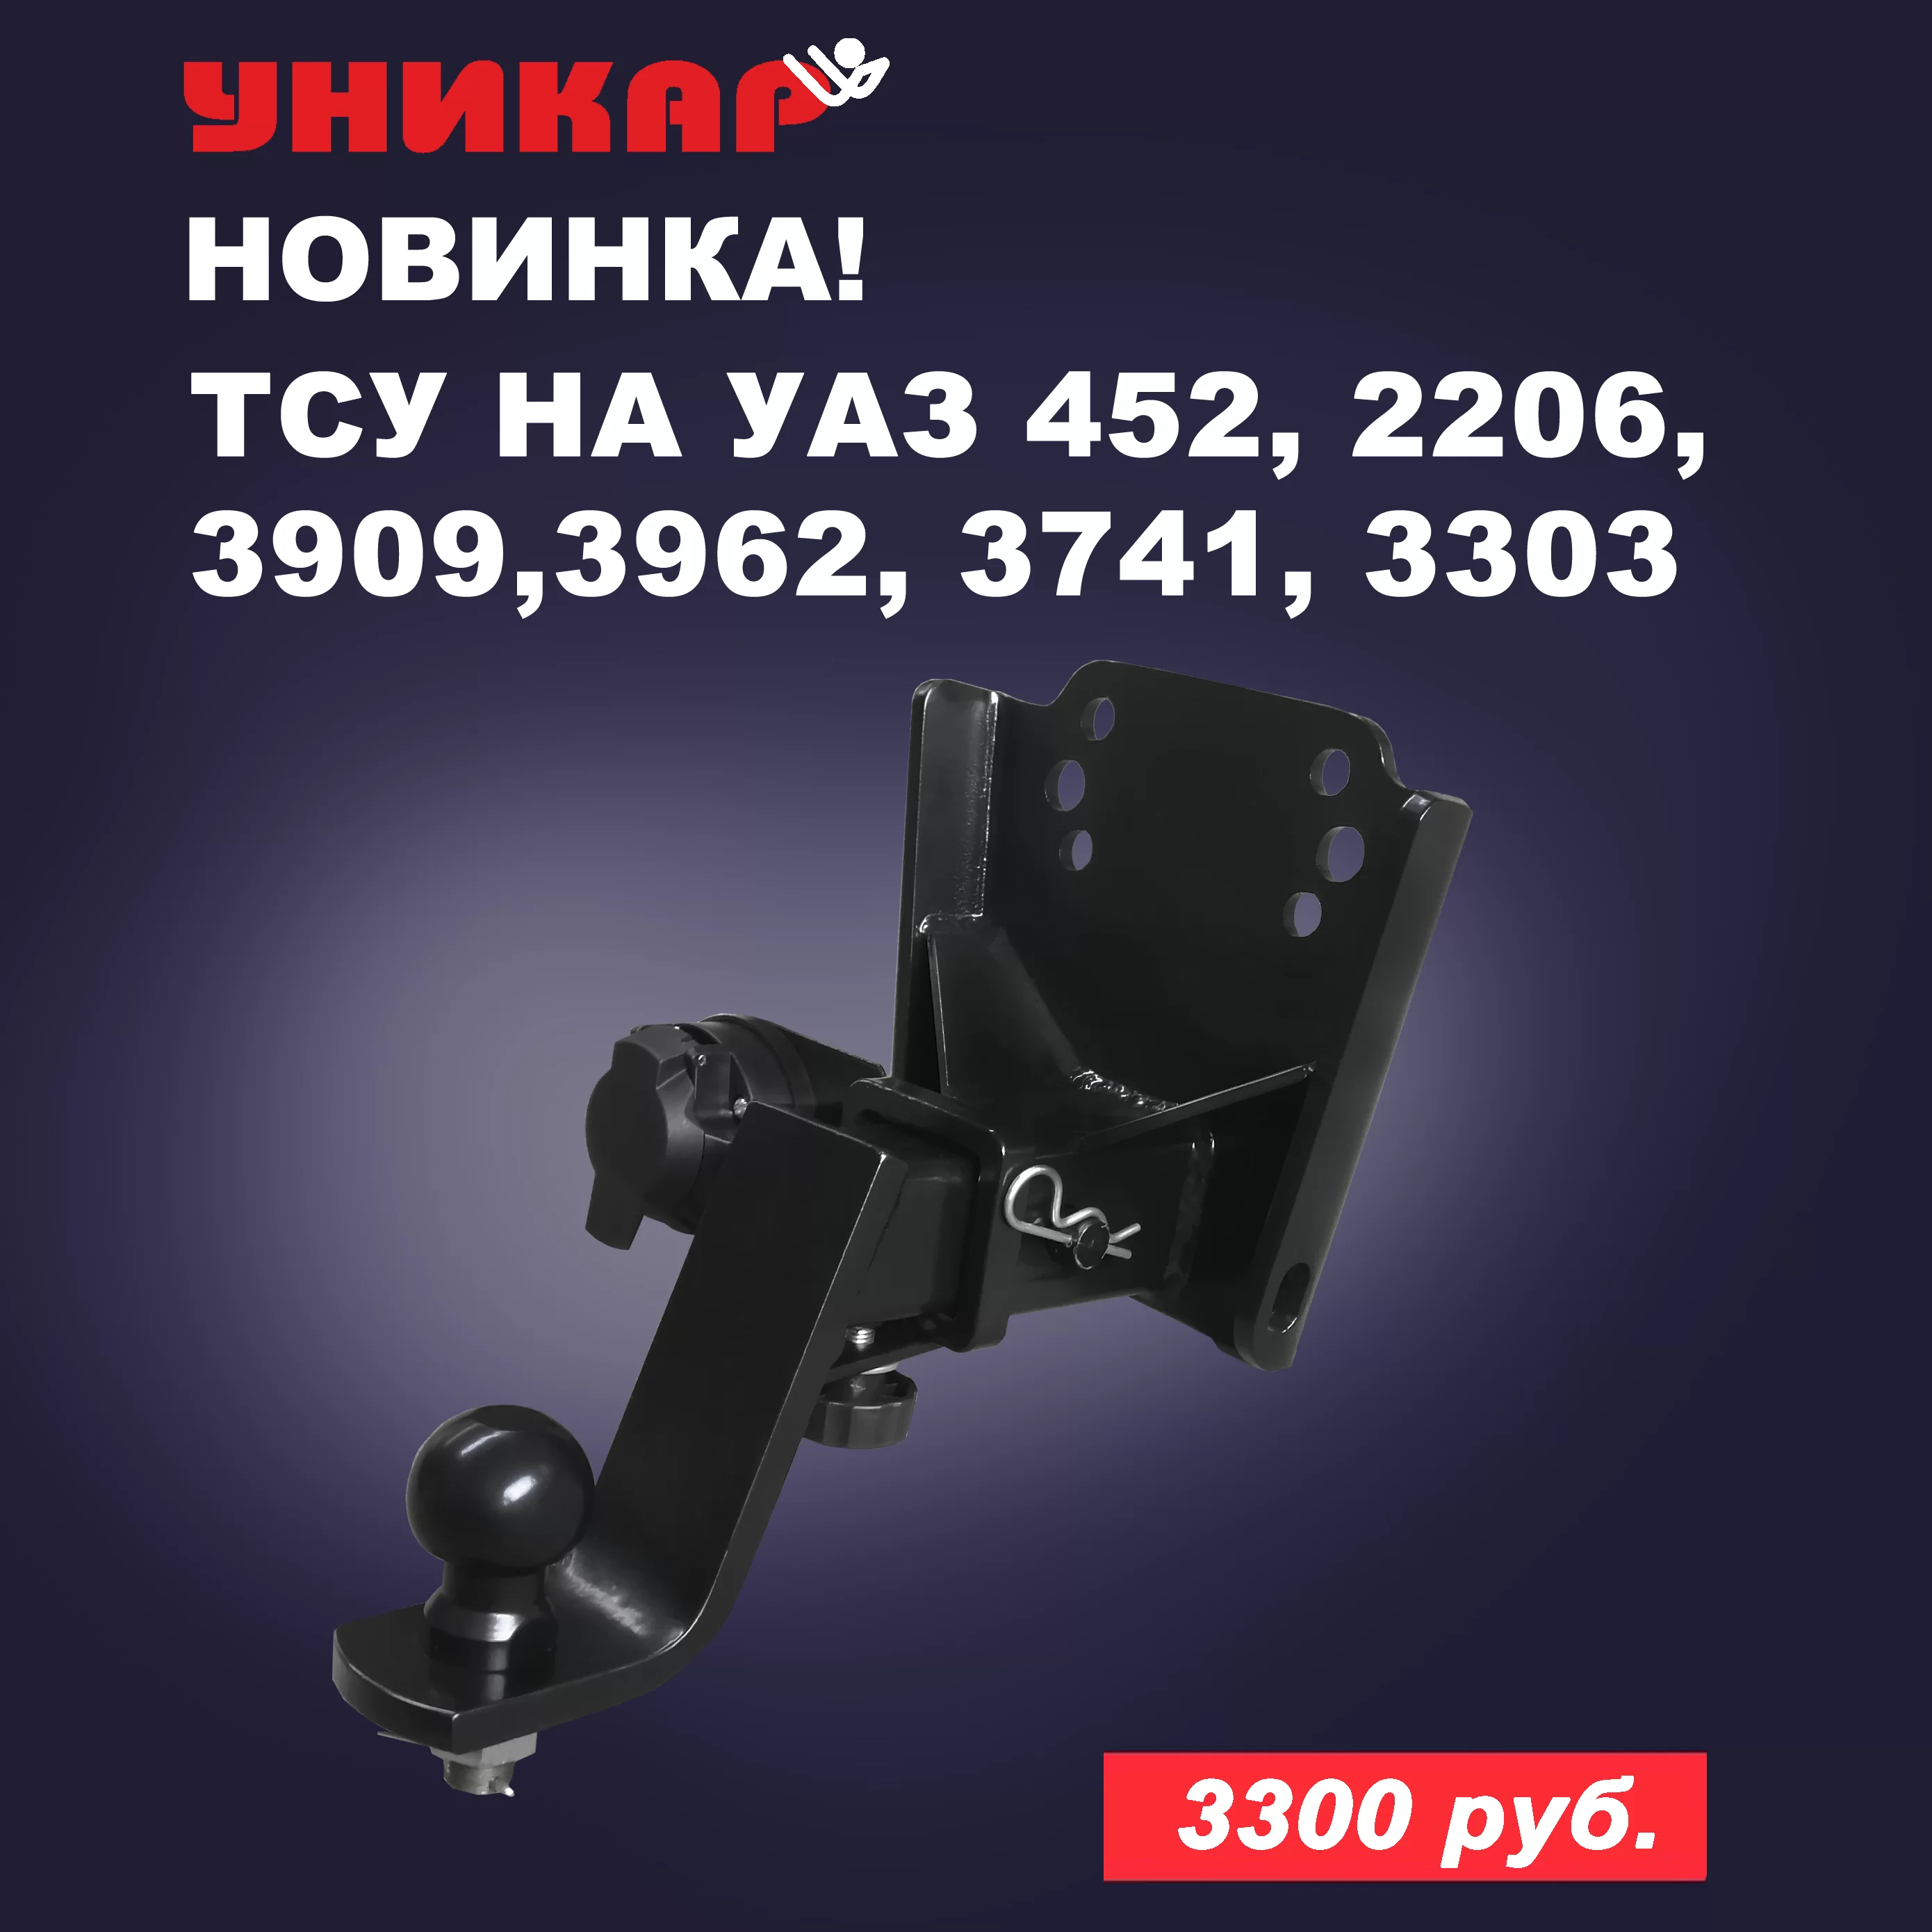 ТСУ УАЗ-2206 (под квадрат)